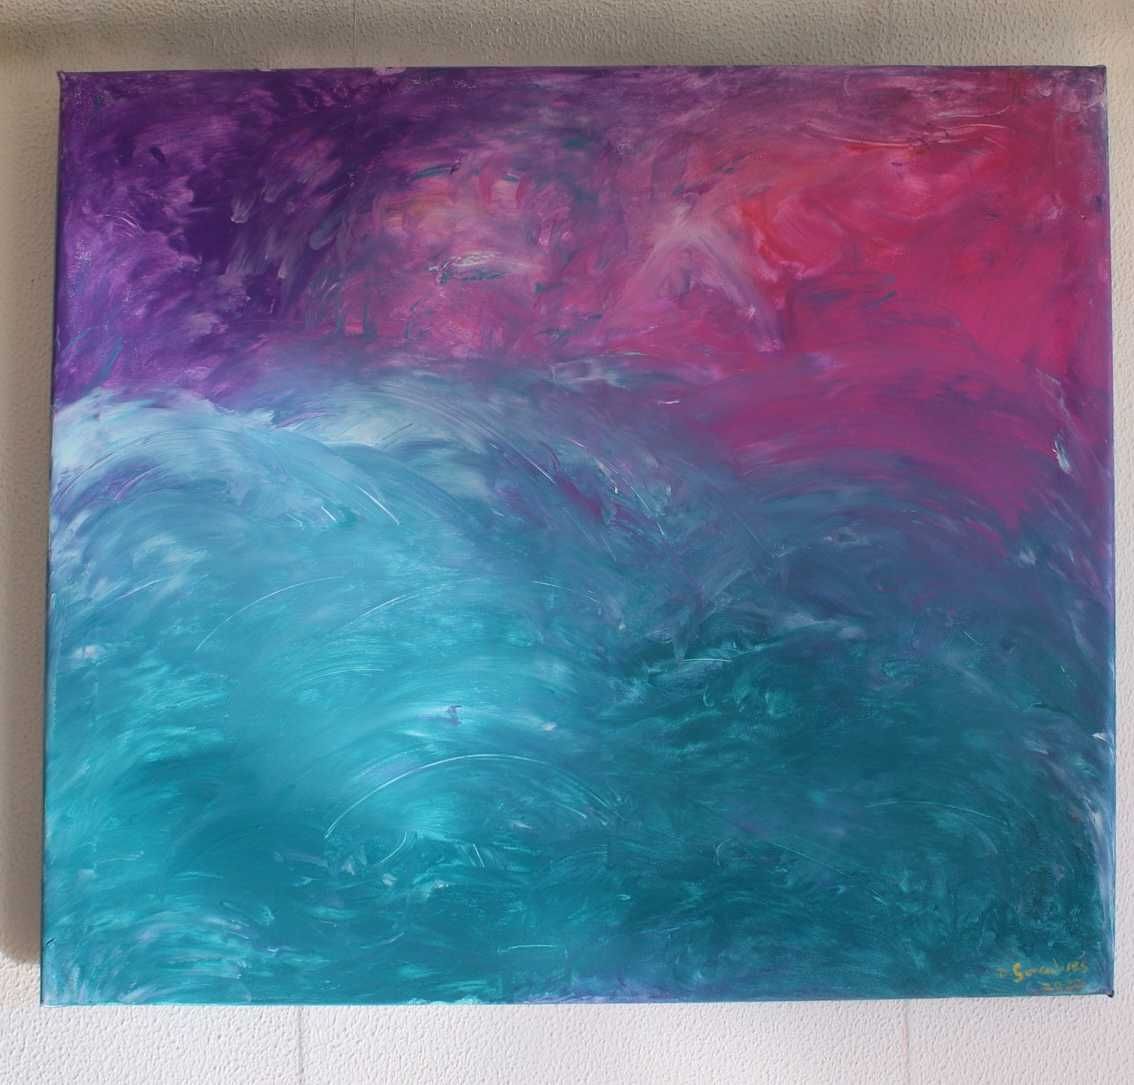 Pintura acrílica - "Waves in the sunset"